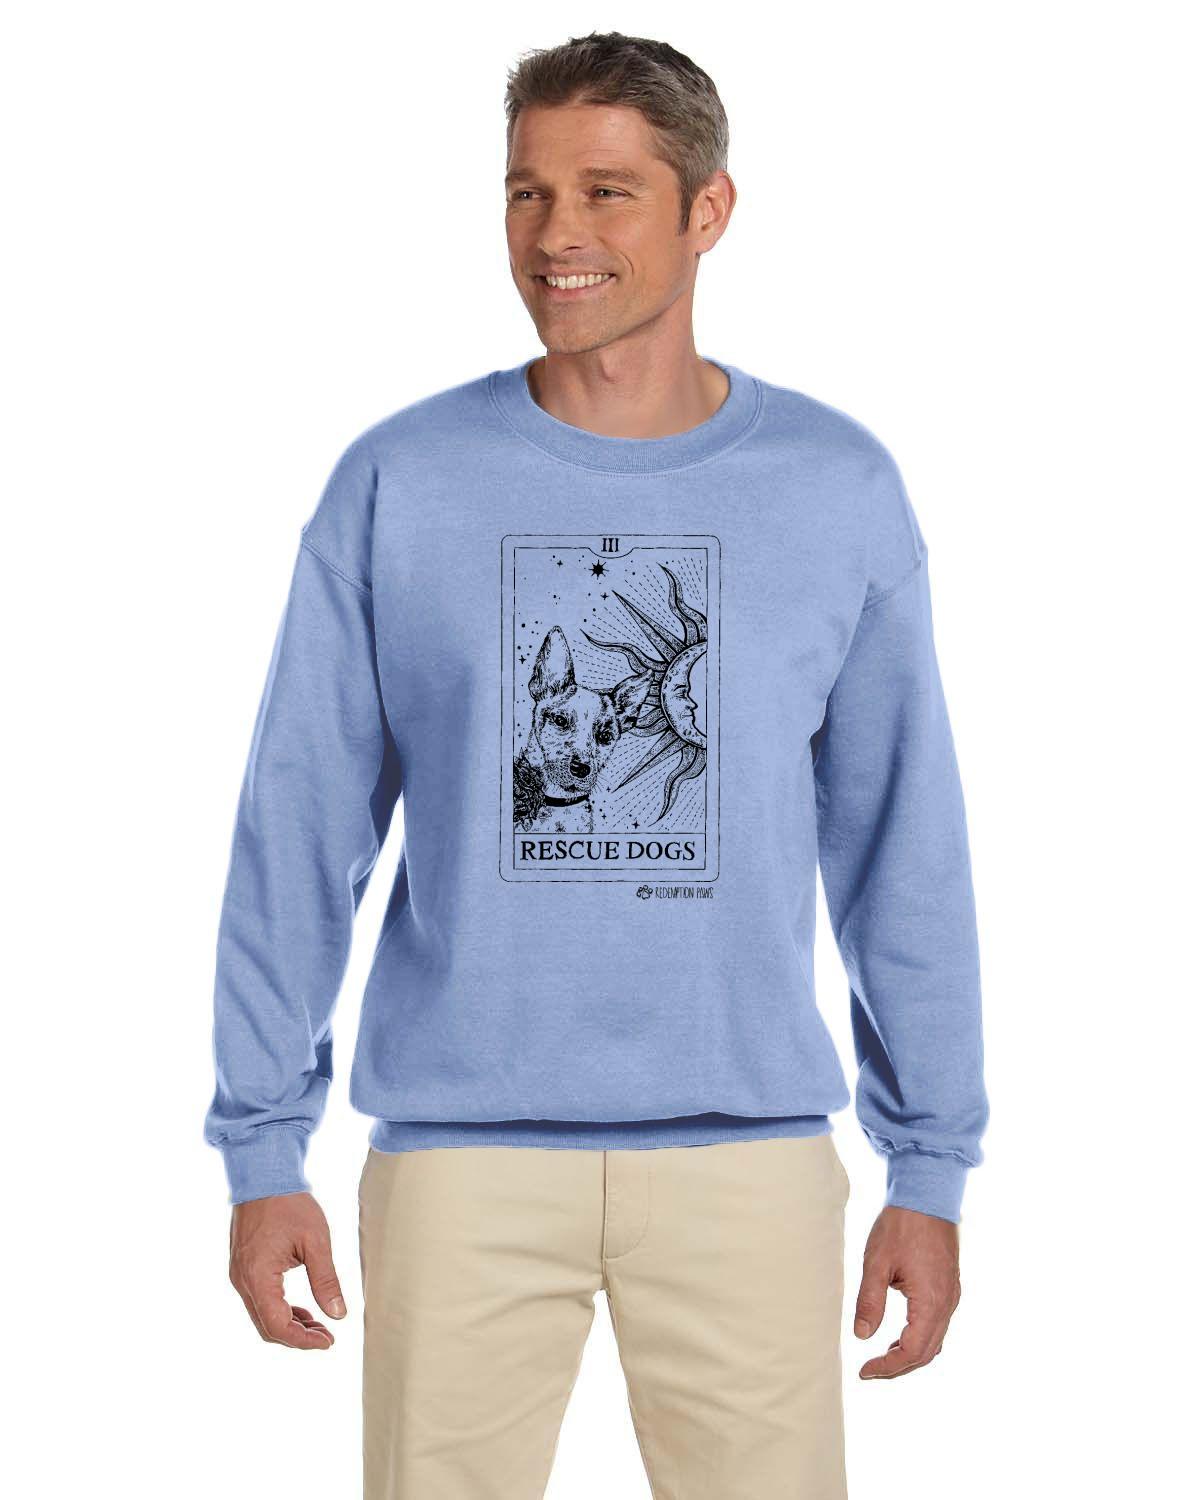 Rescue Dogs Tarot Sweatshirt